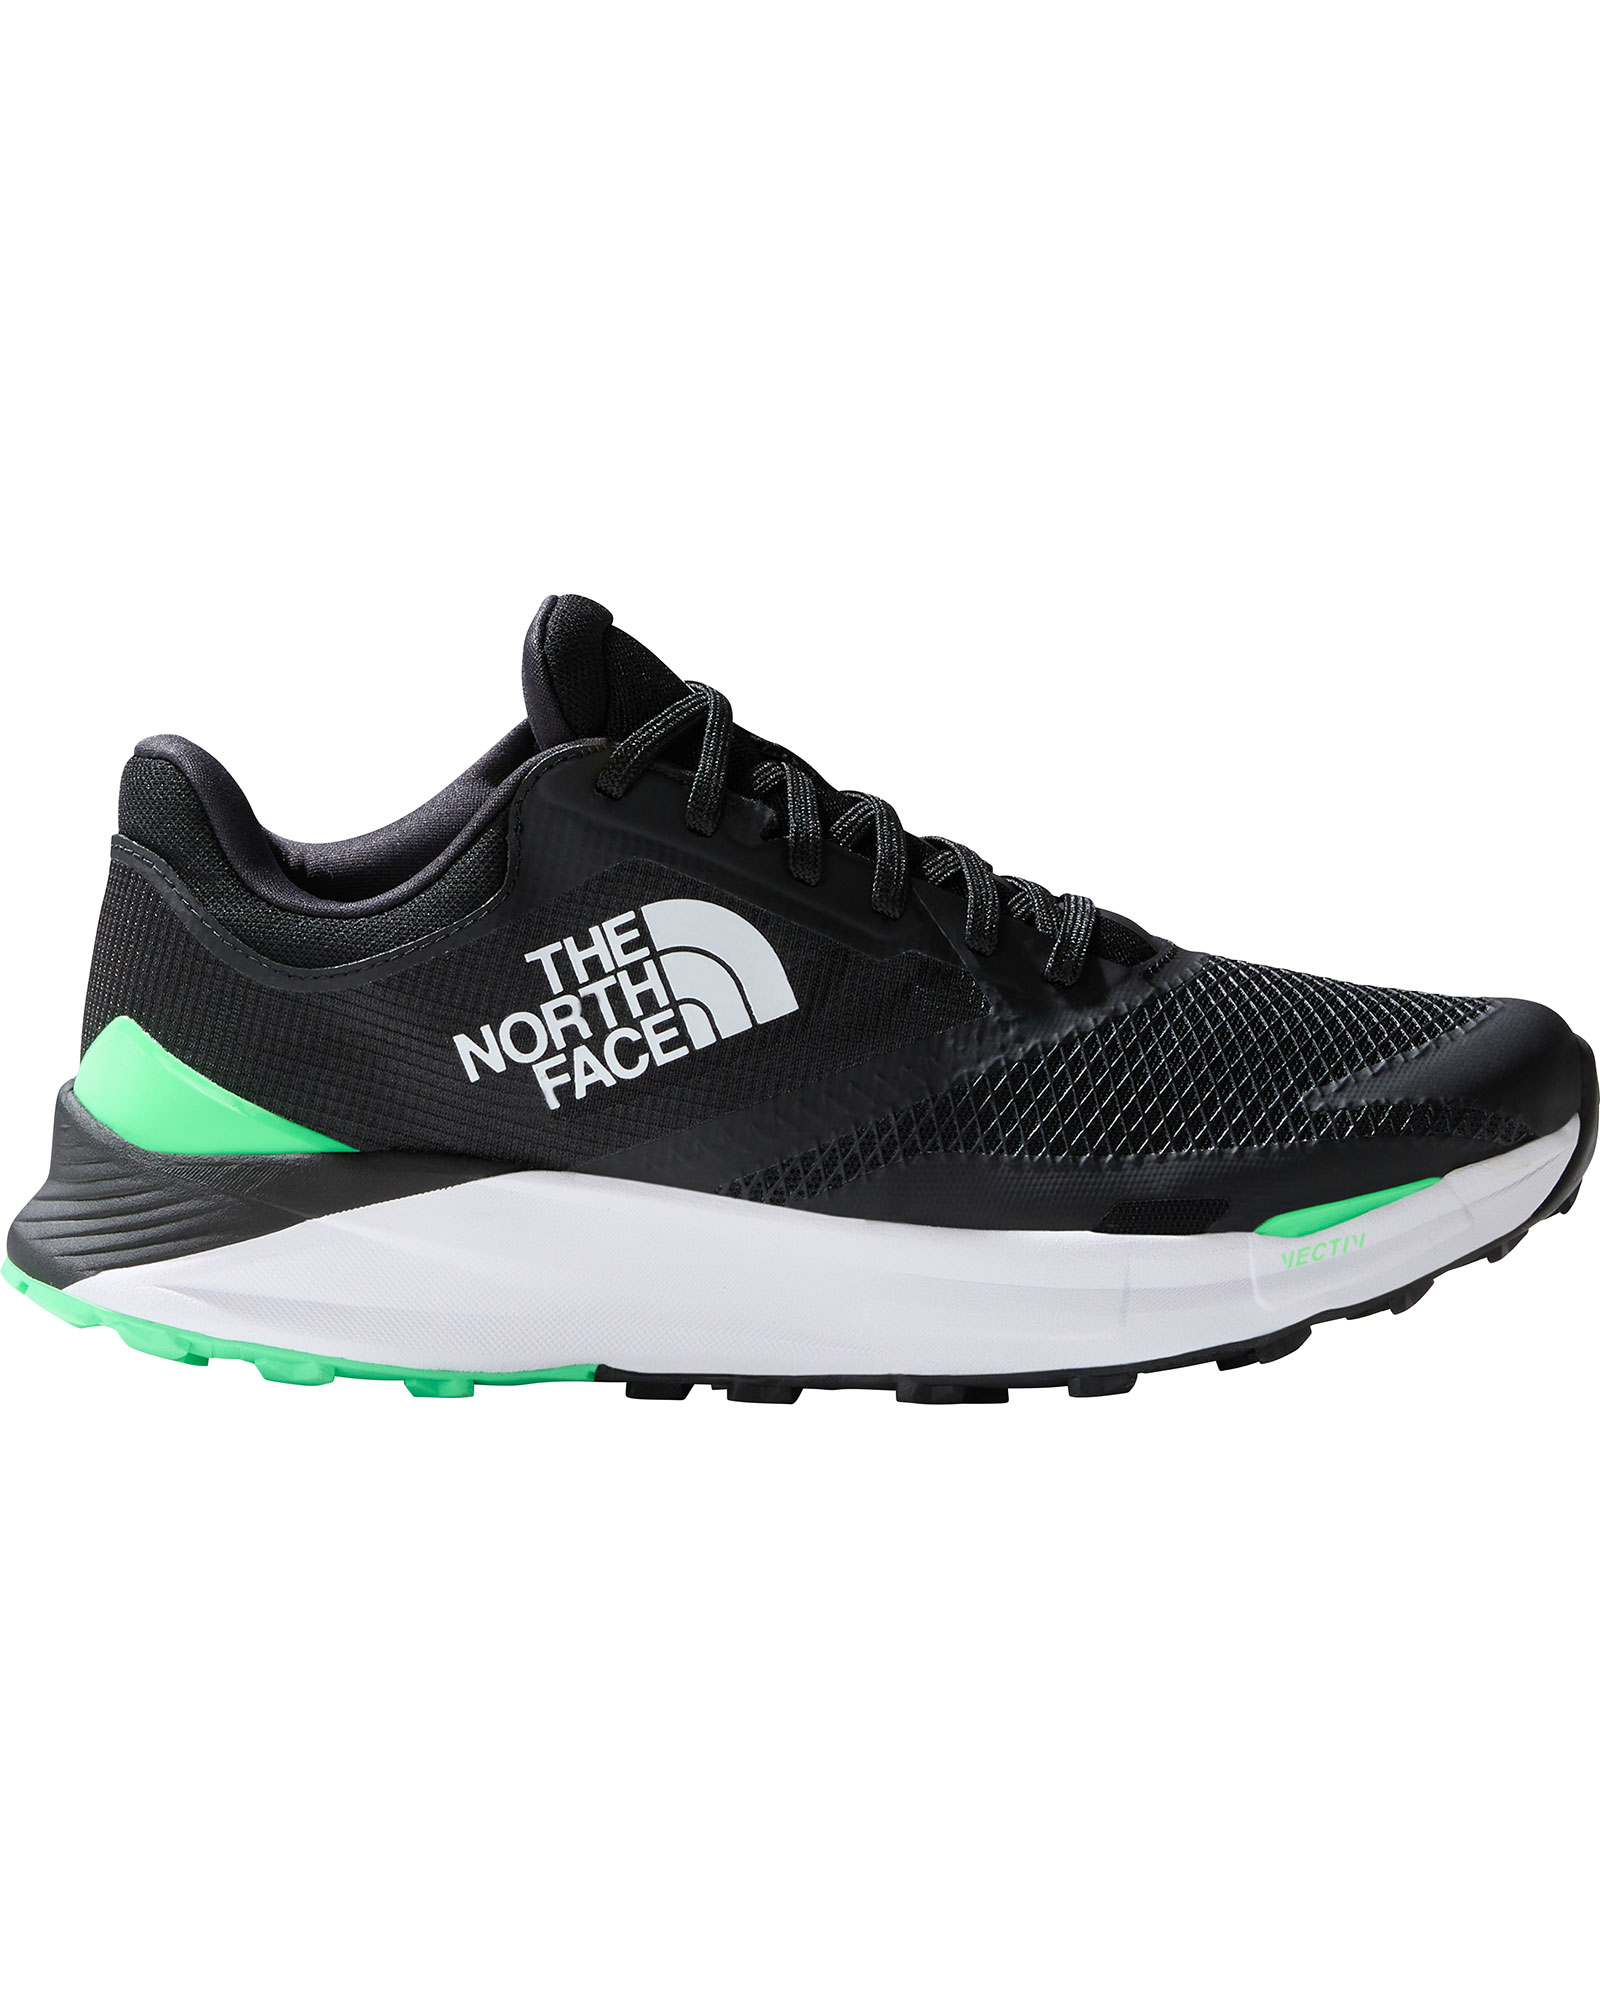 The North Face Vectiv Enduris 3 Men’s Trail Shoes - TNF Black/Chlorophyll Green UK 10